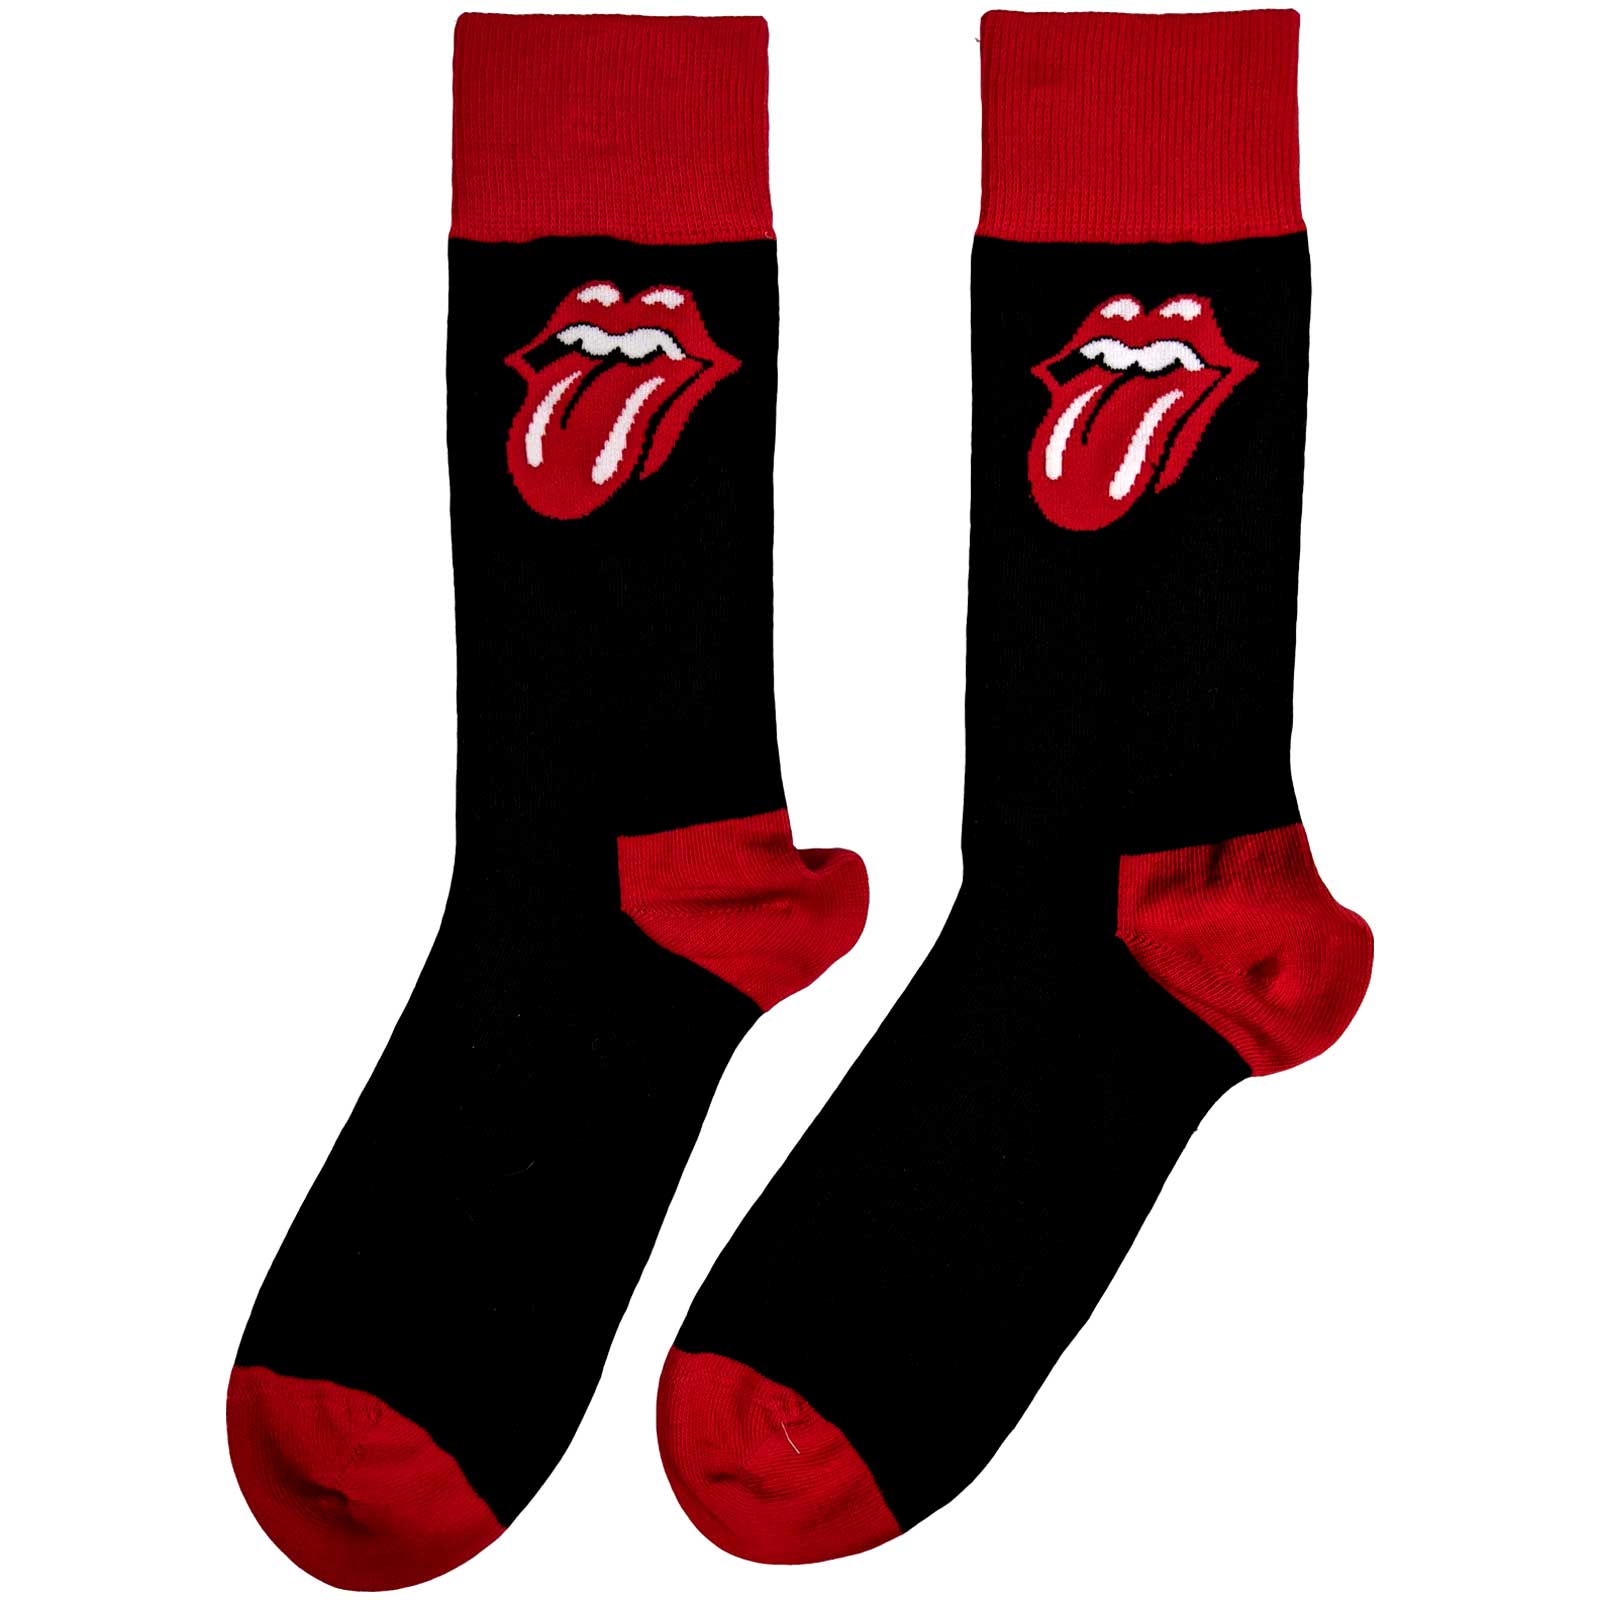 Rolling Stones Socks Tongue Logo - Ireland Vinyl